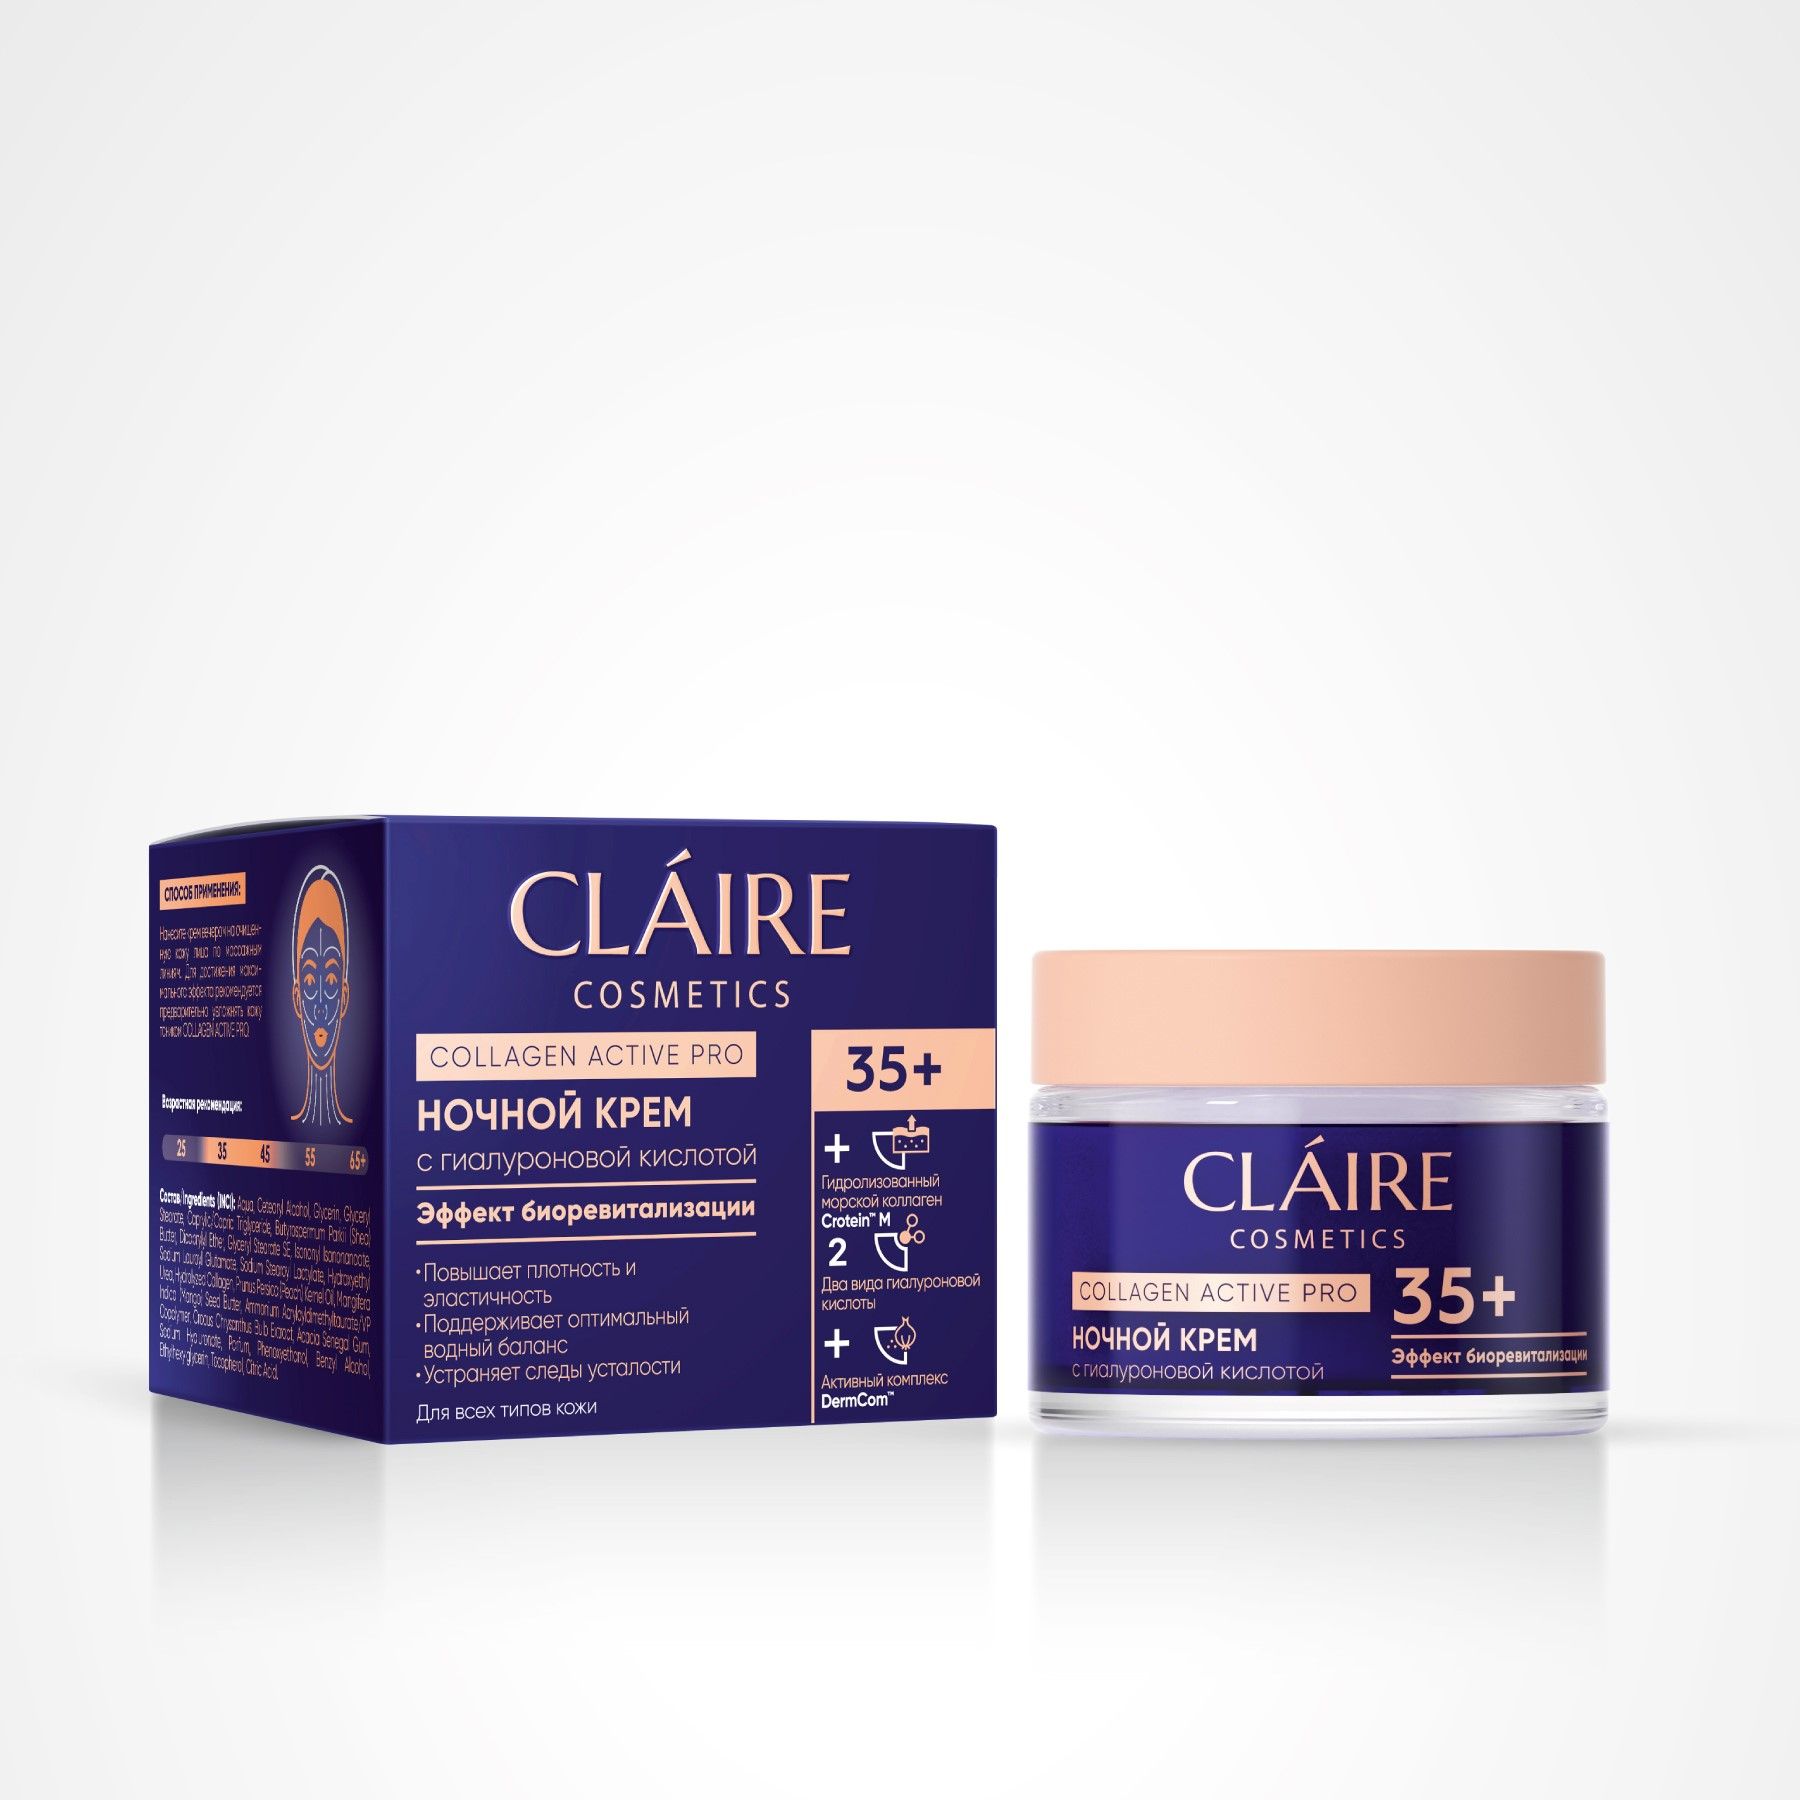 Claire Cosmetics Collagen Active Pro. Крем для лица с коллагеном 55+. Крем Claire белорусский. Dilis Collagen Active Pro.